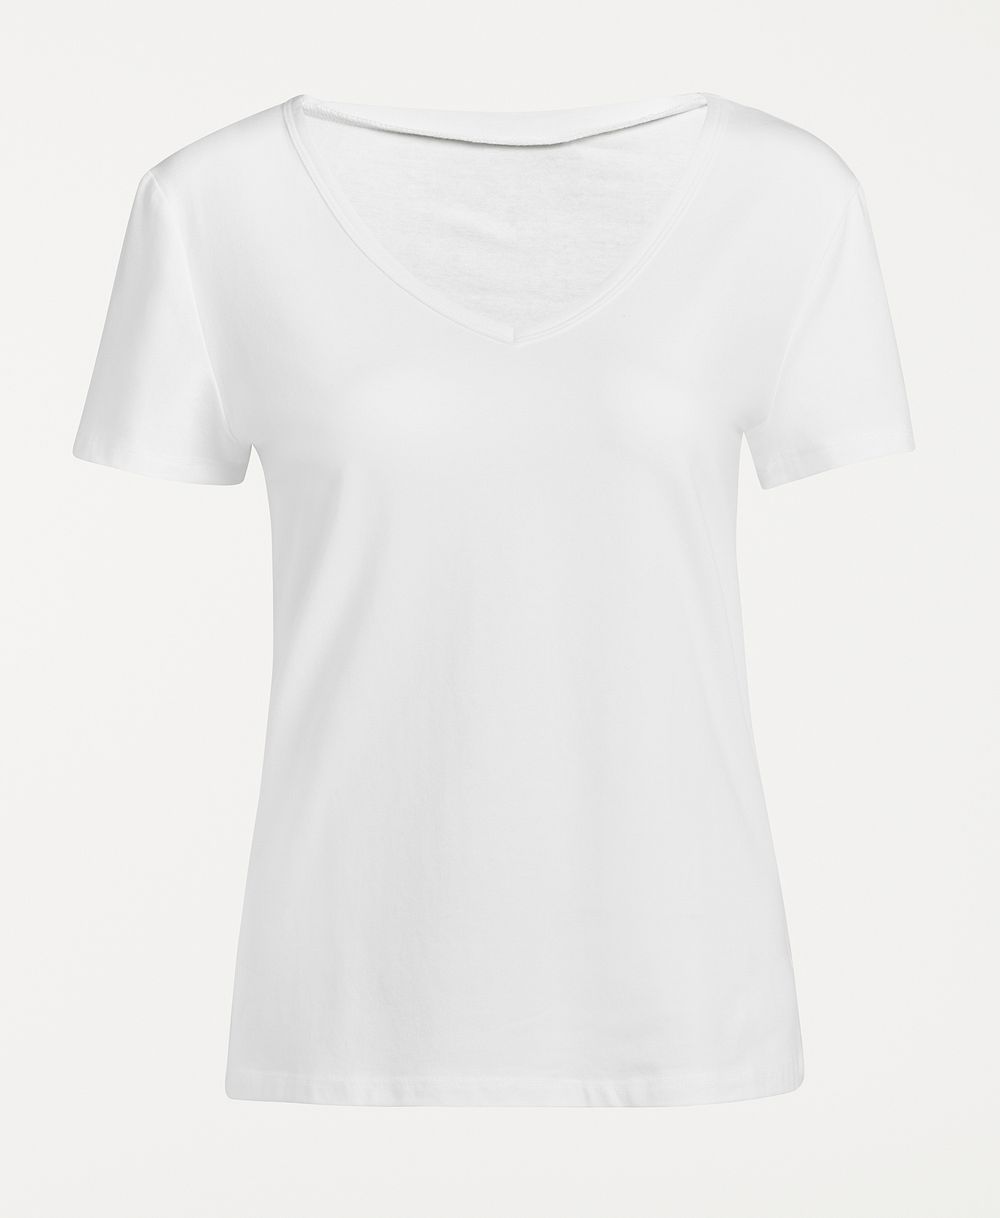 White t-shirt mockup white background | Premium PSD - rawpixel